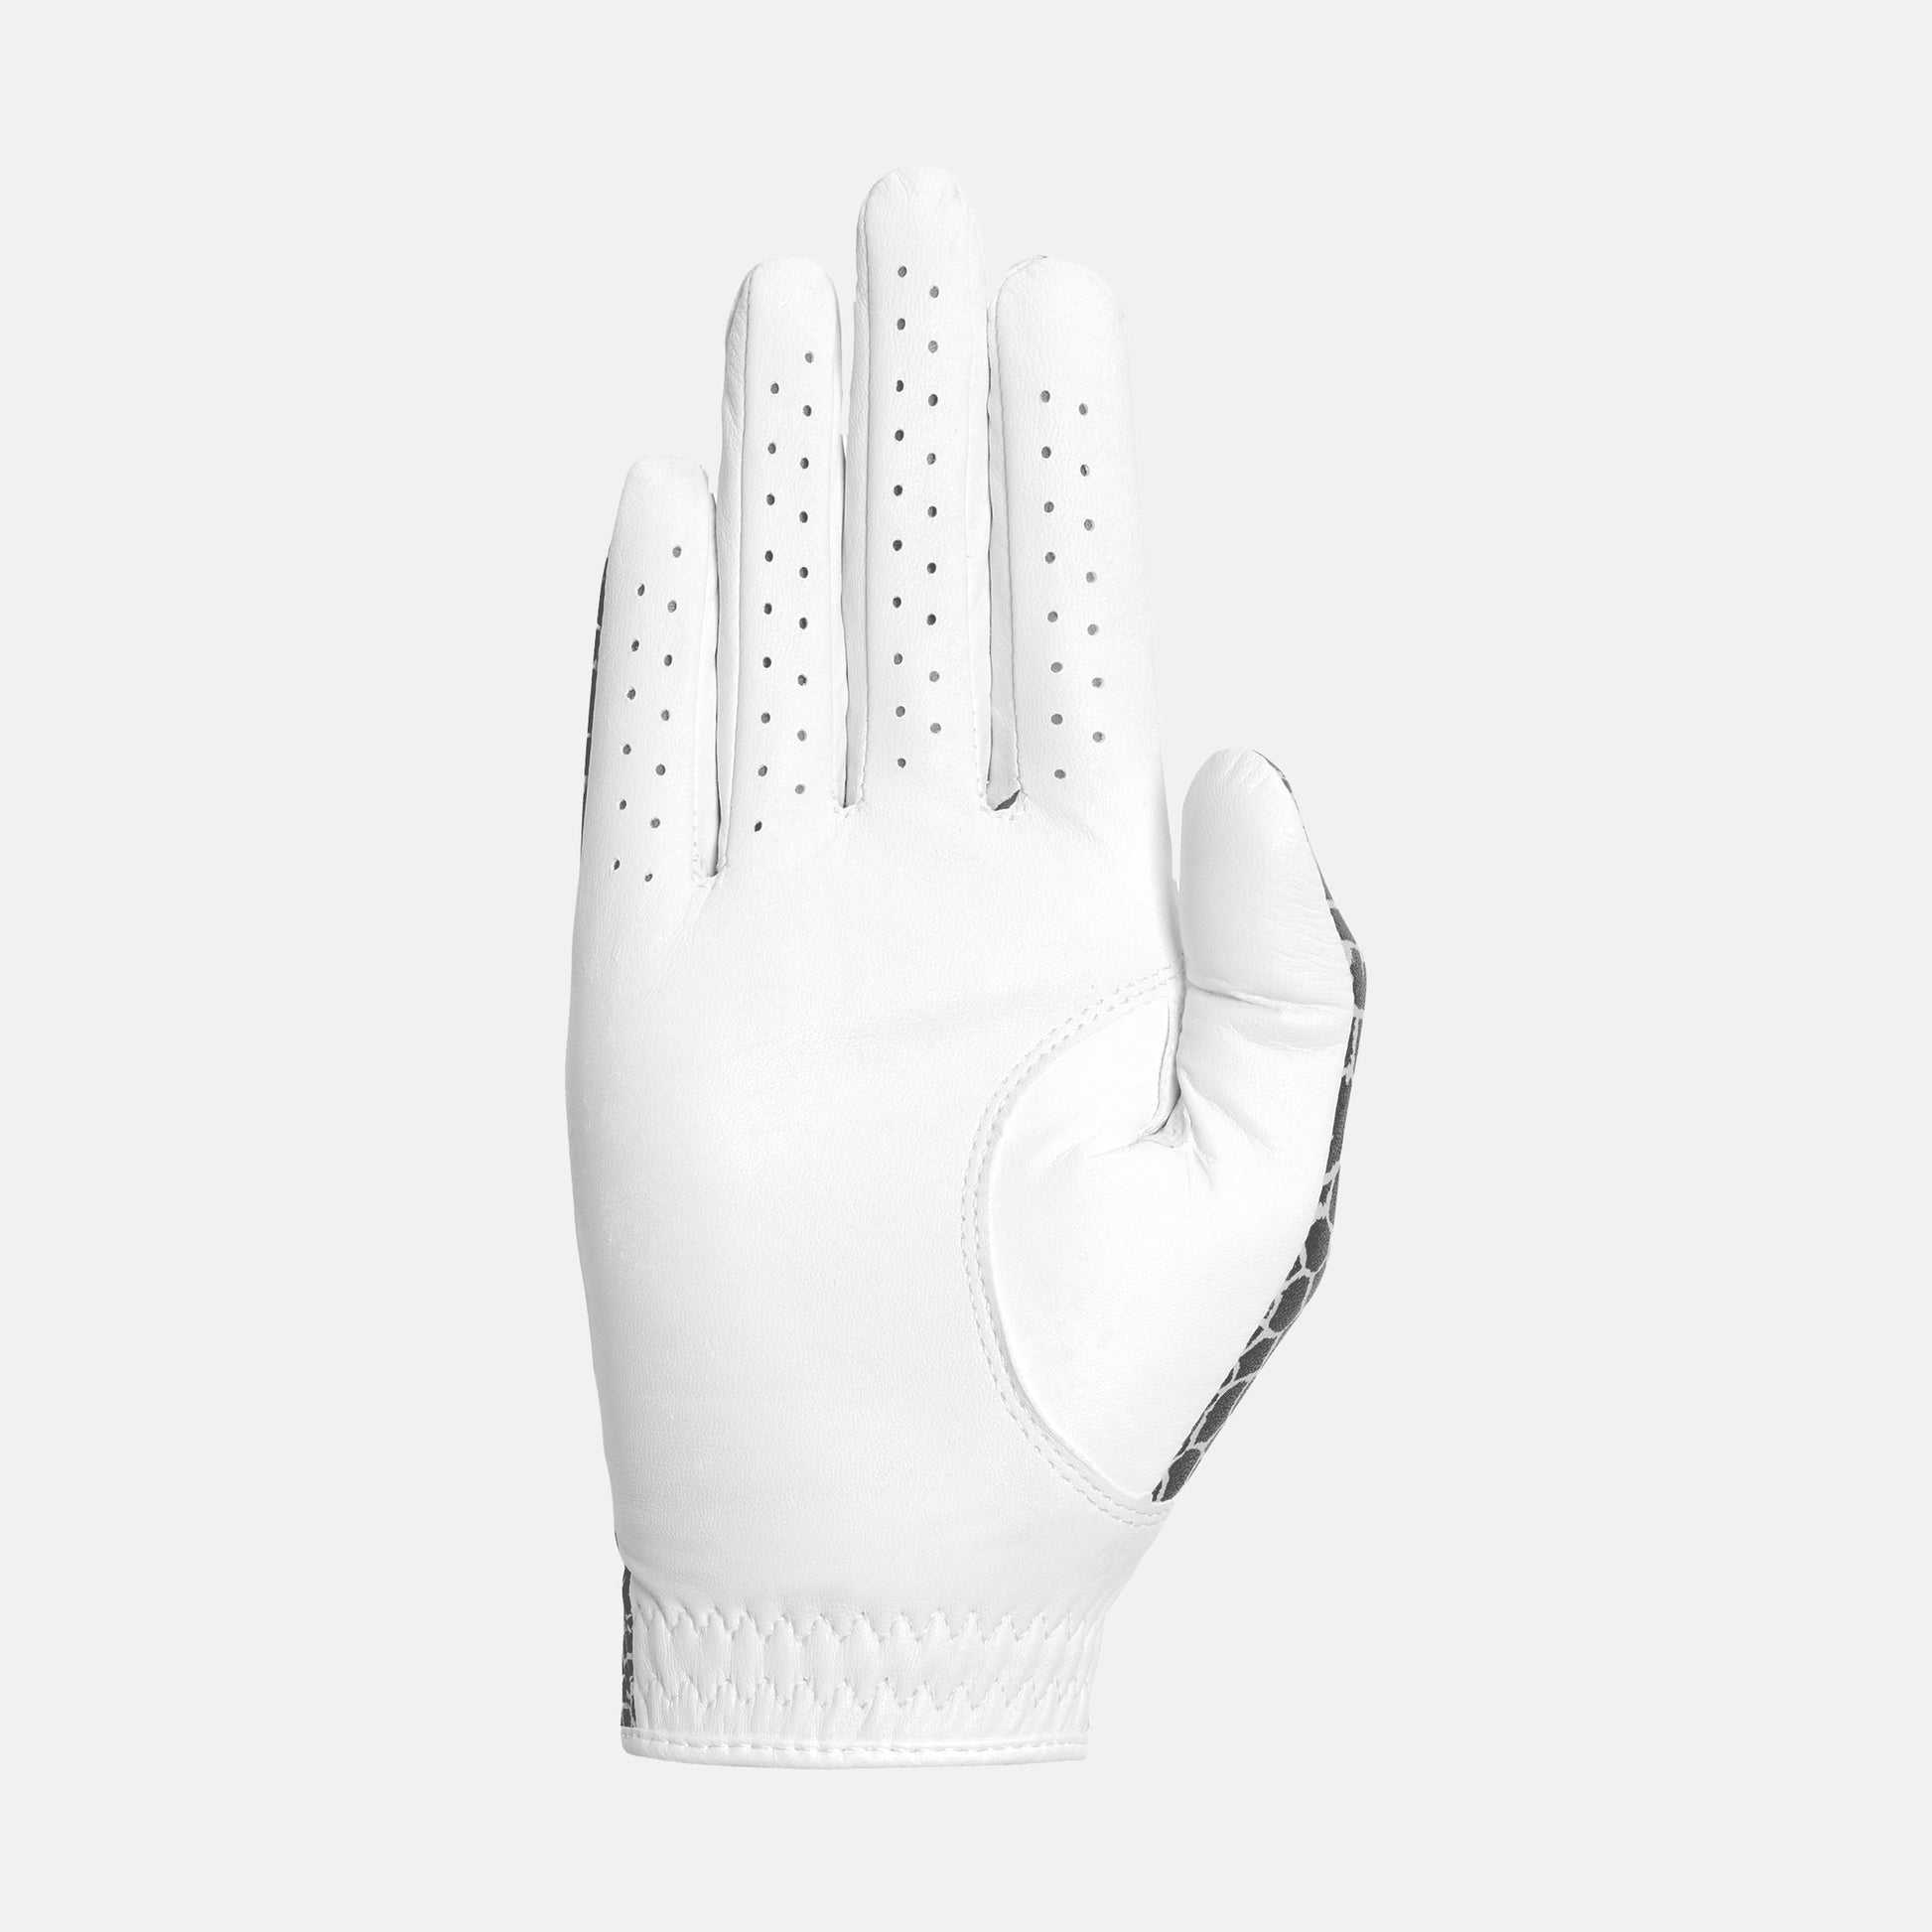 Designer Pro White/giraffe Women's right handed golf glove with Premium selected Cabretta leather and microfibre